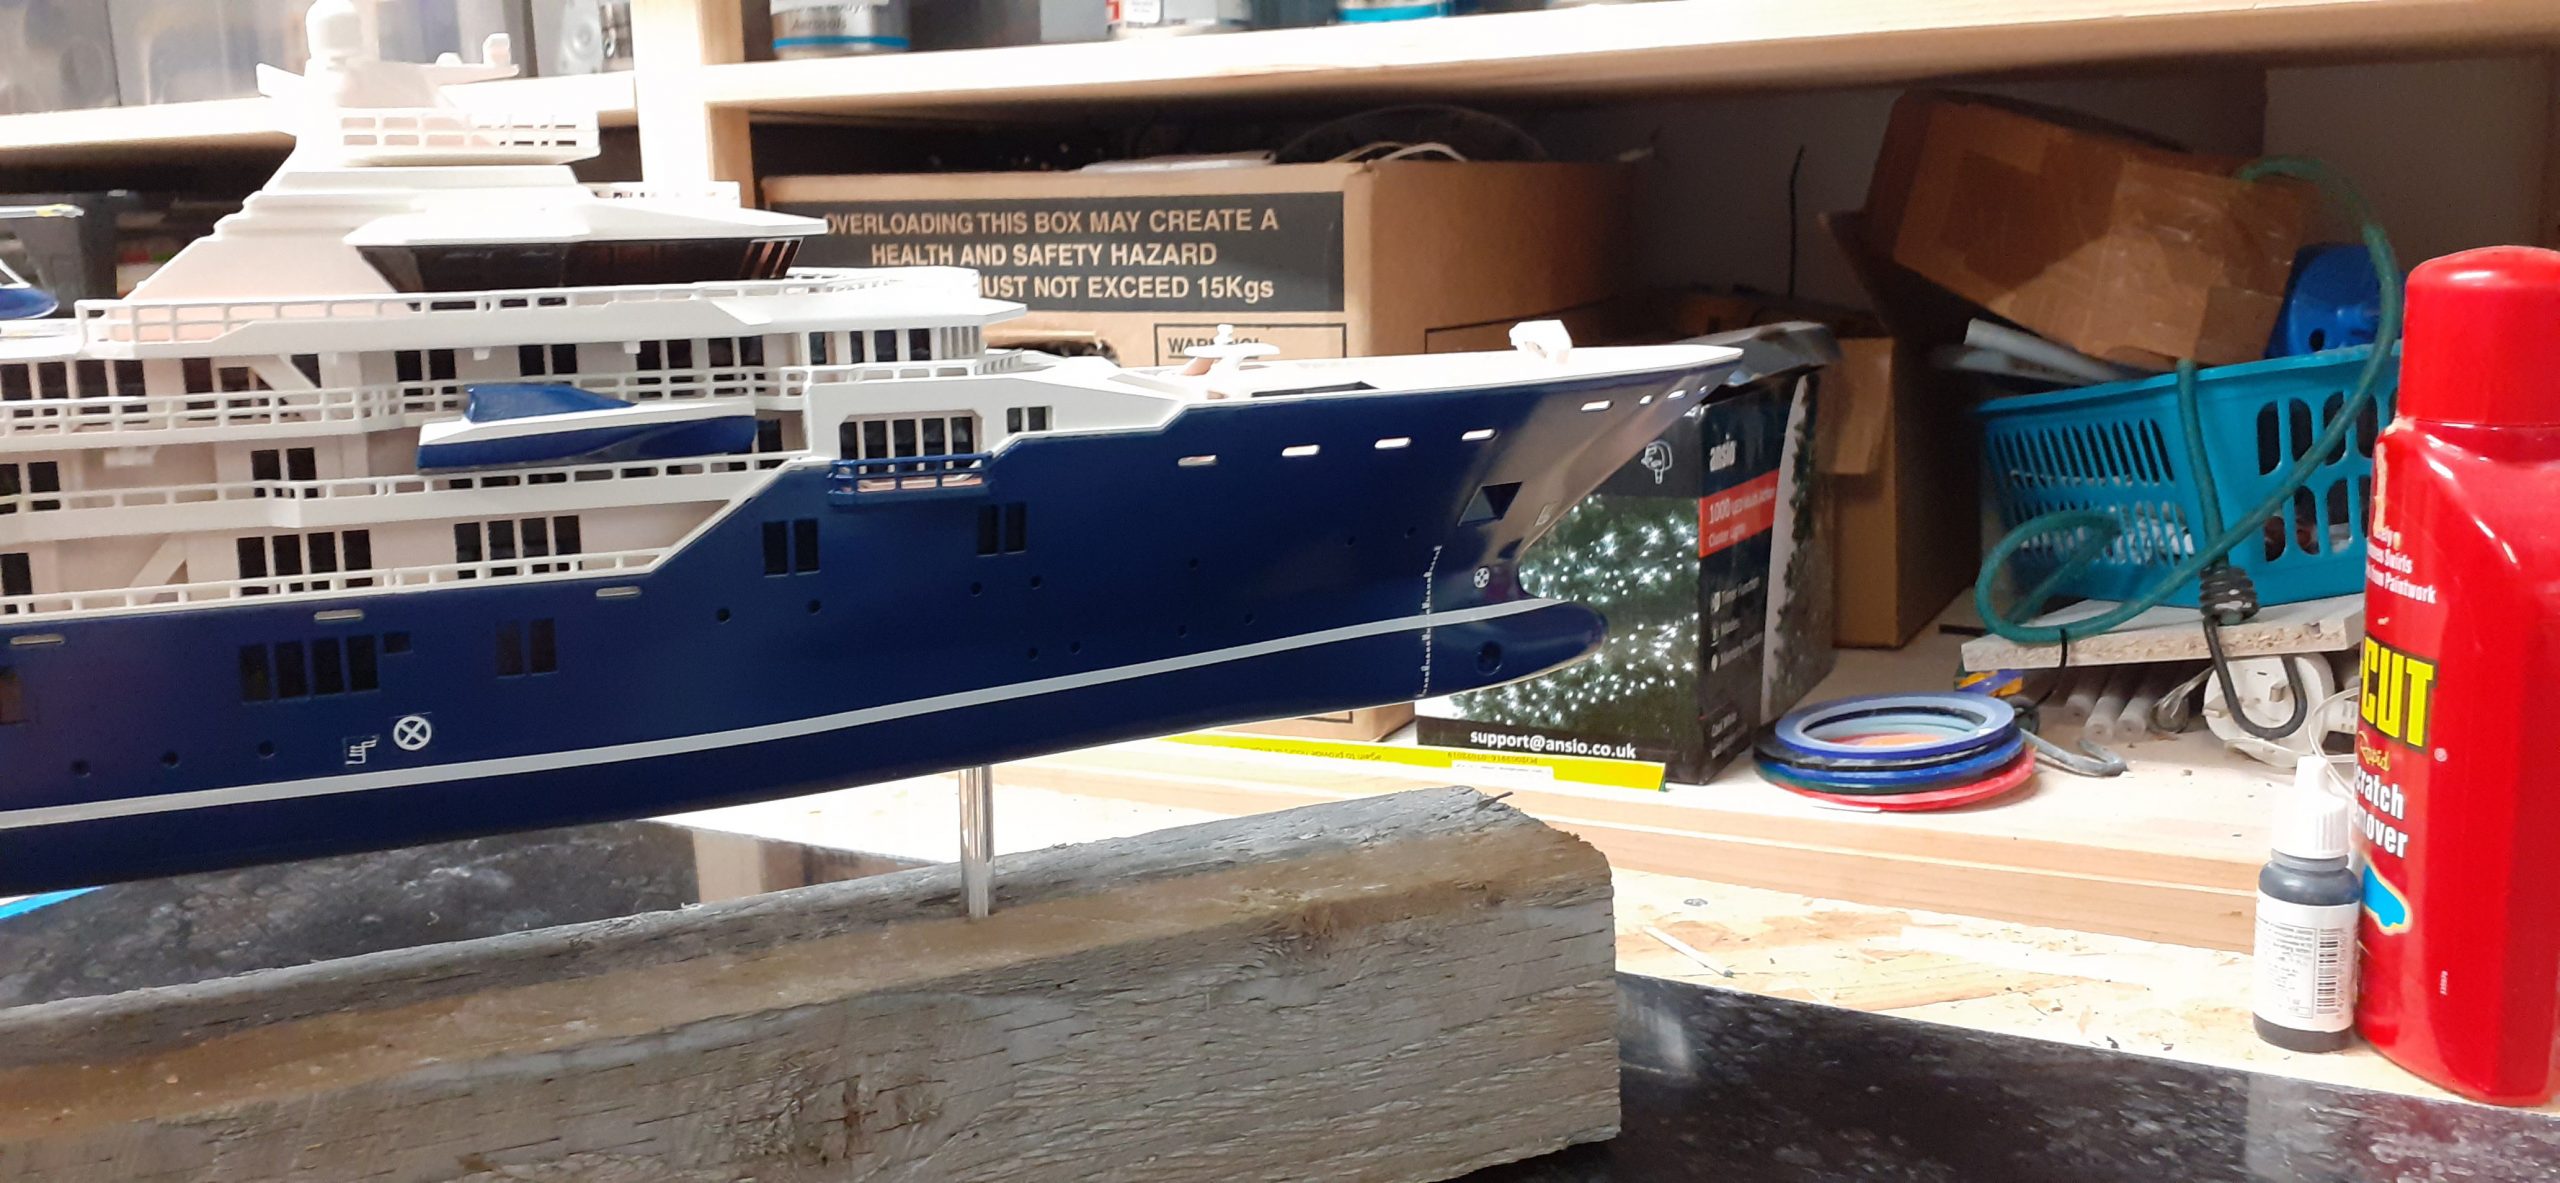 Ulysses Model Yacht